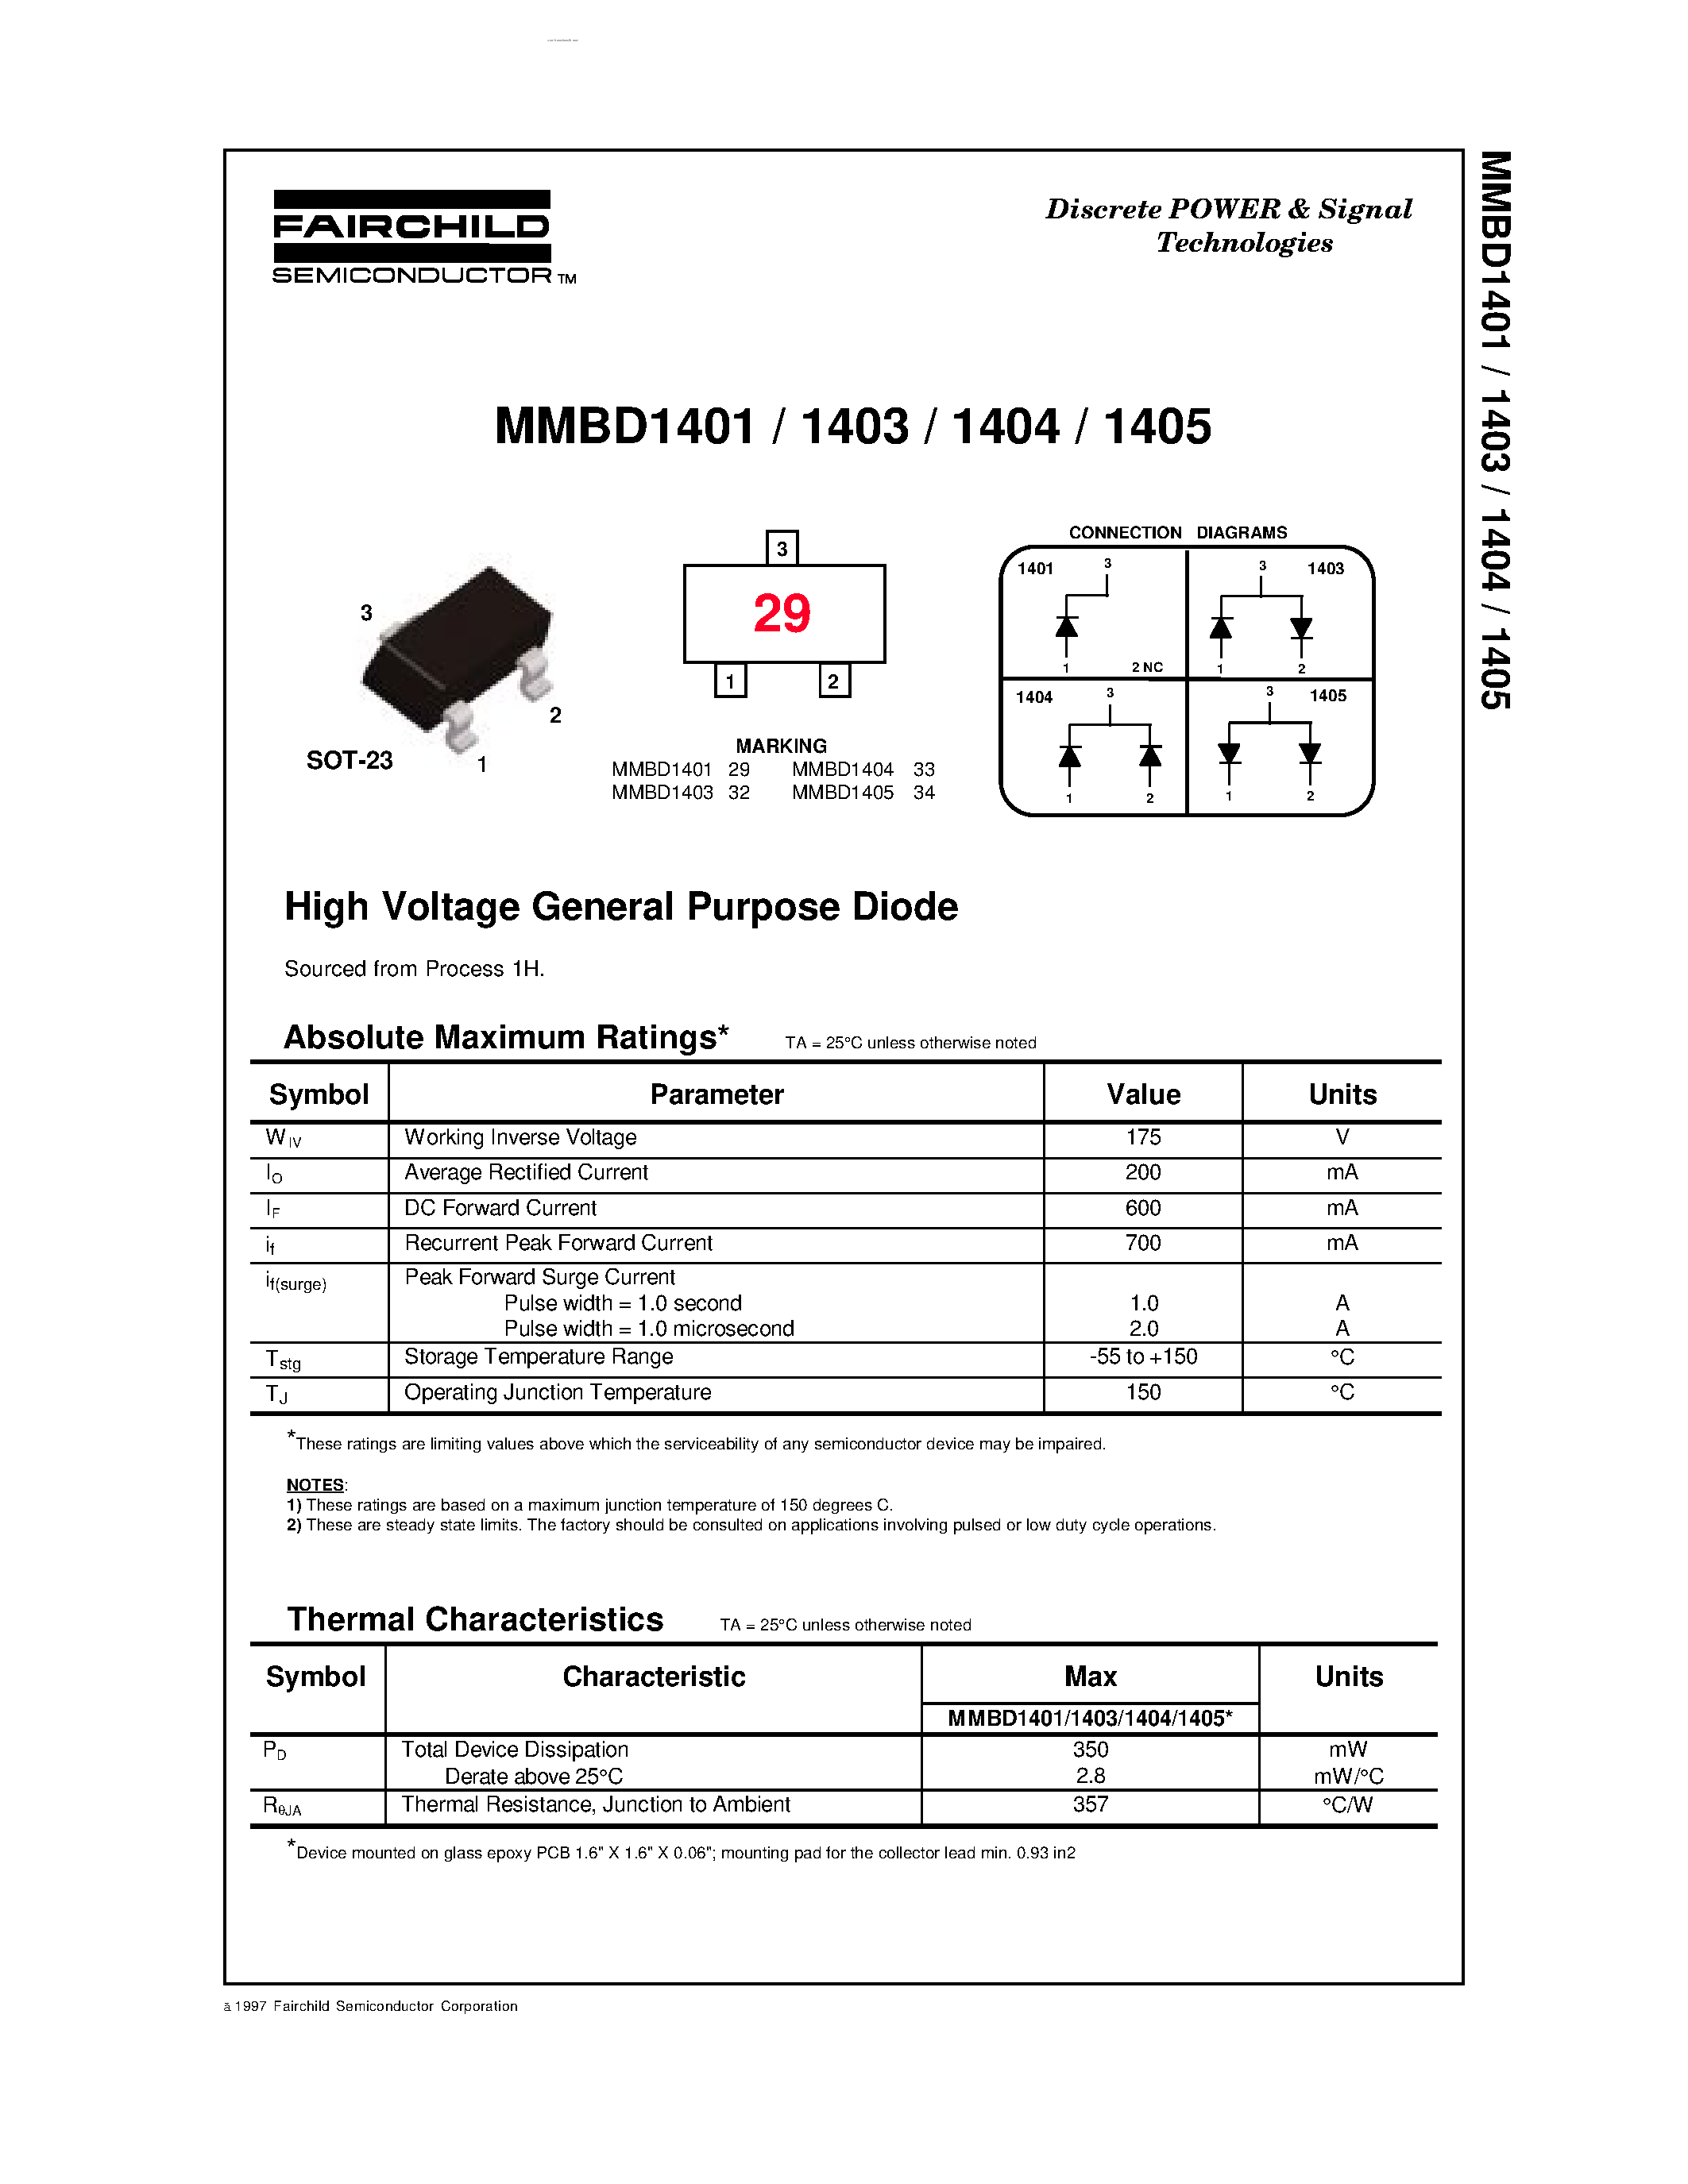 Datasheet MMBD1405 - High Voltage General Purpose Diode page 1